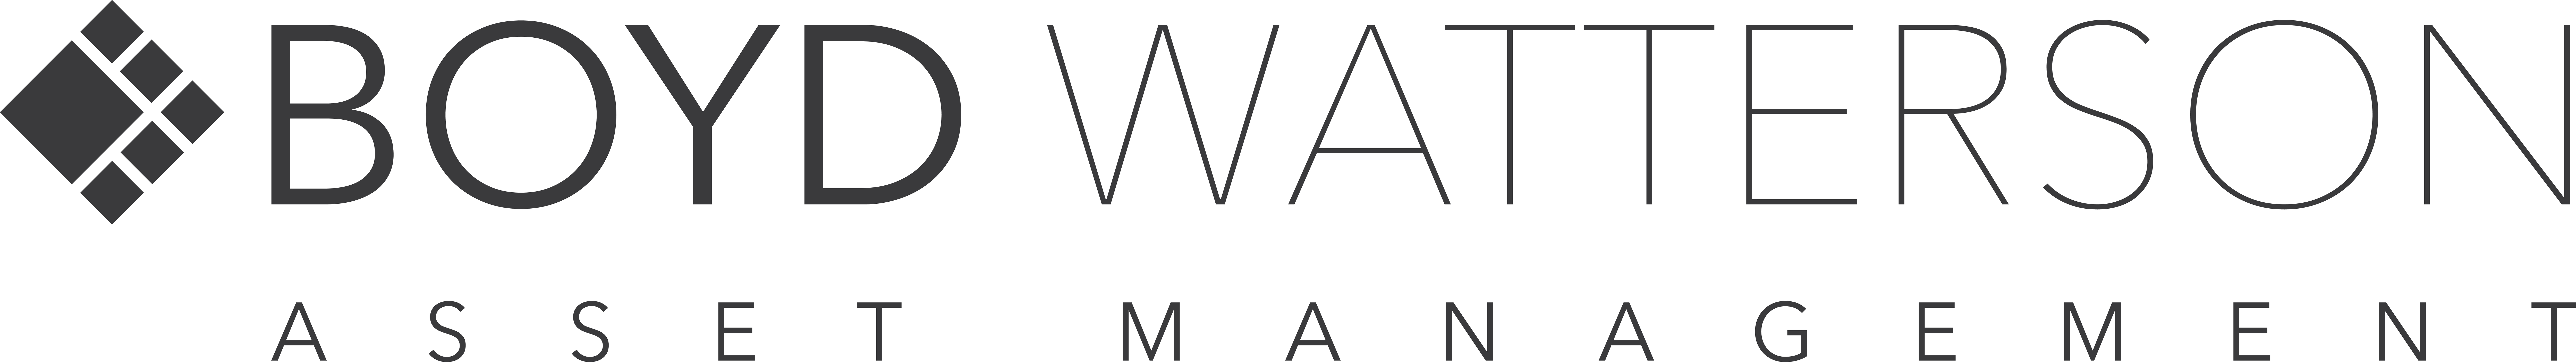 Boyd Watterson Logo